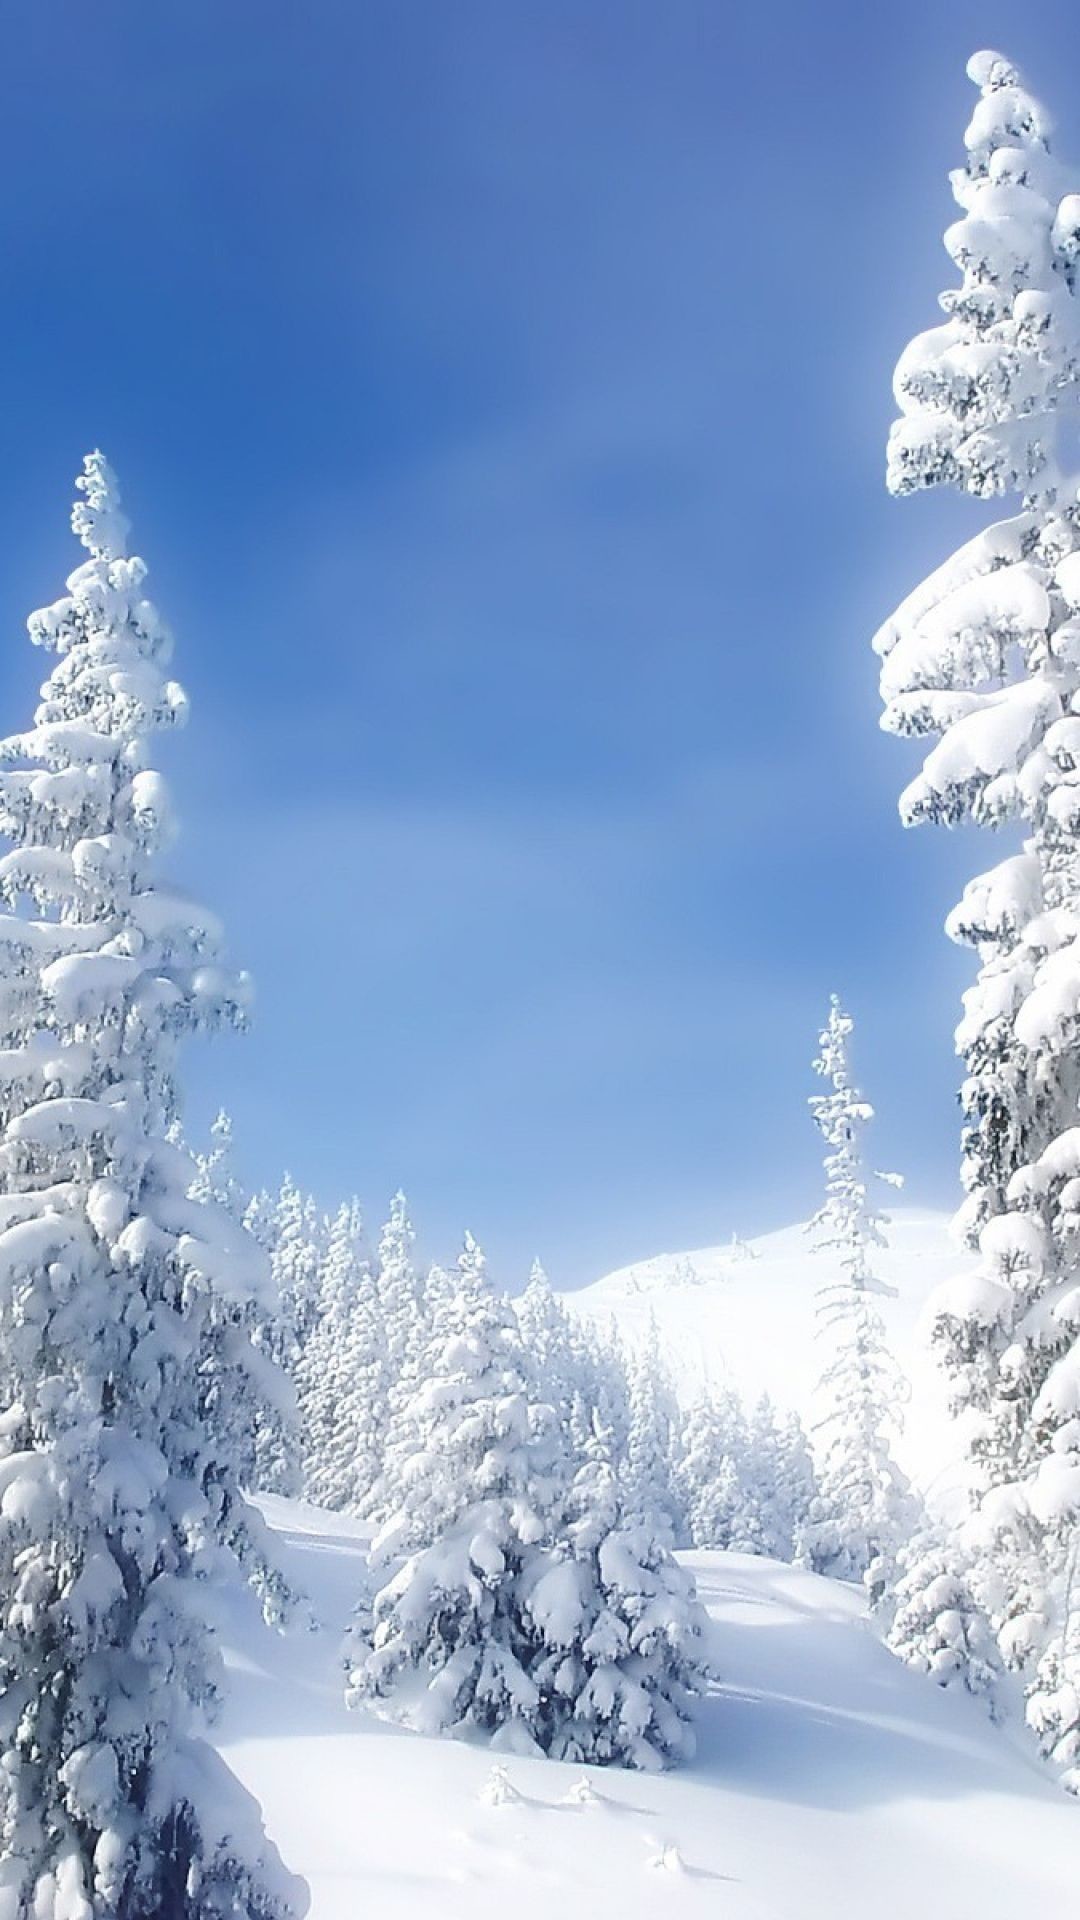 15 Best cute desktop wallpaper winter You Can Download It For Free ...